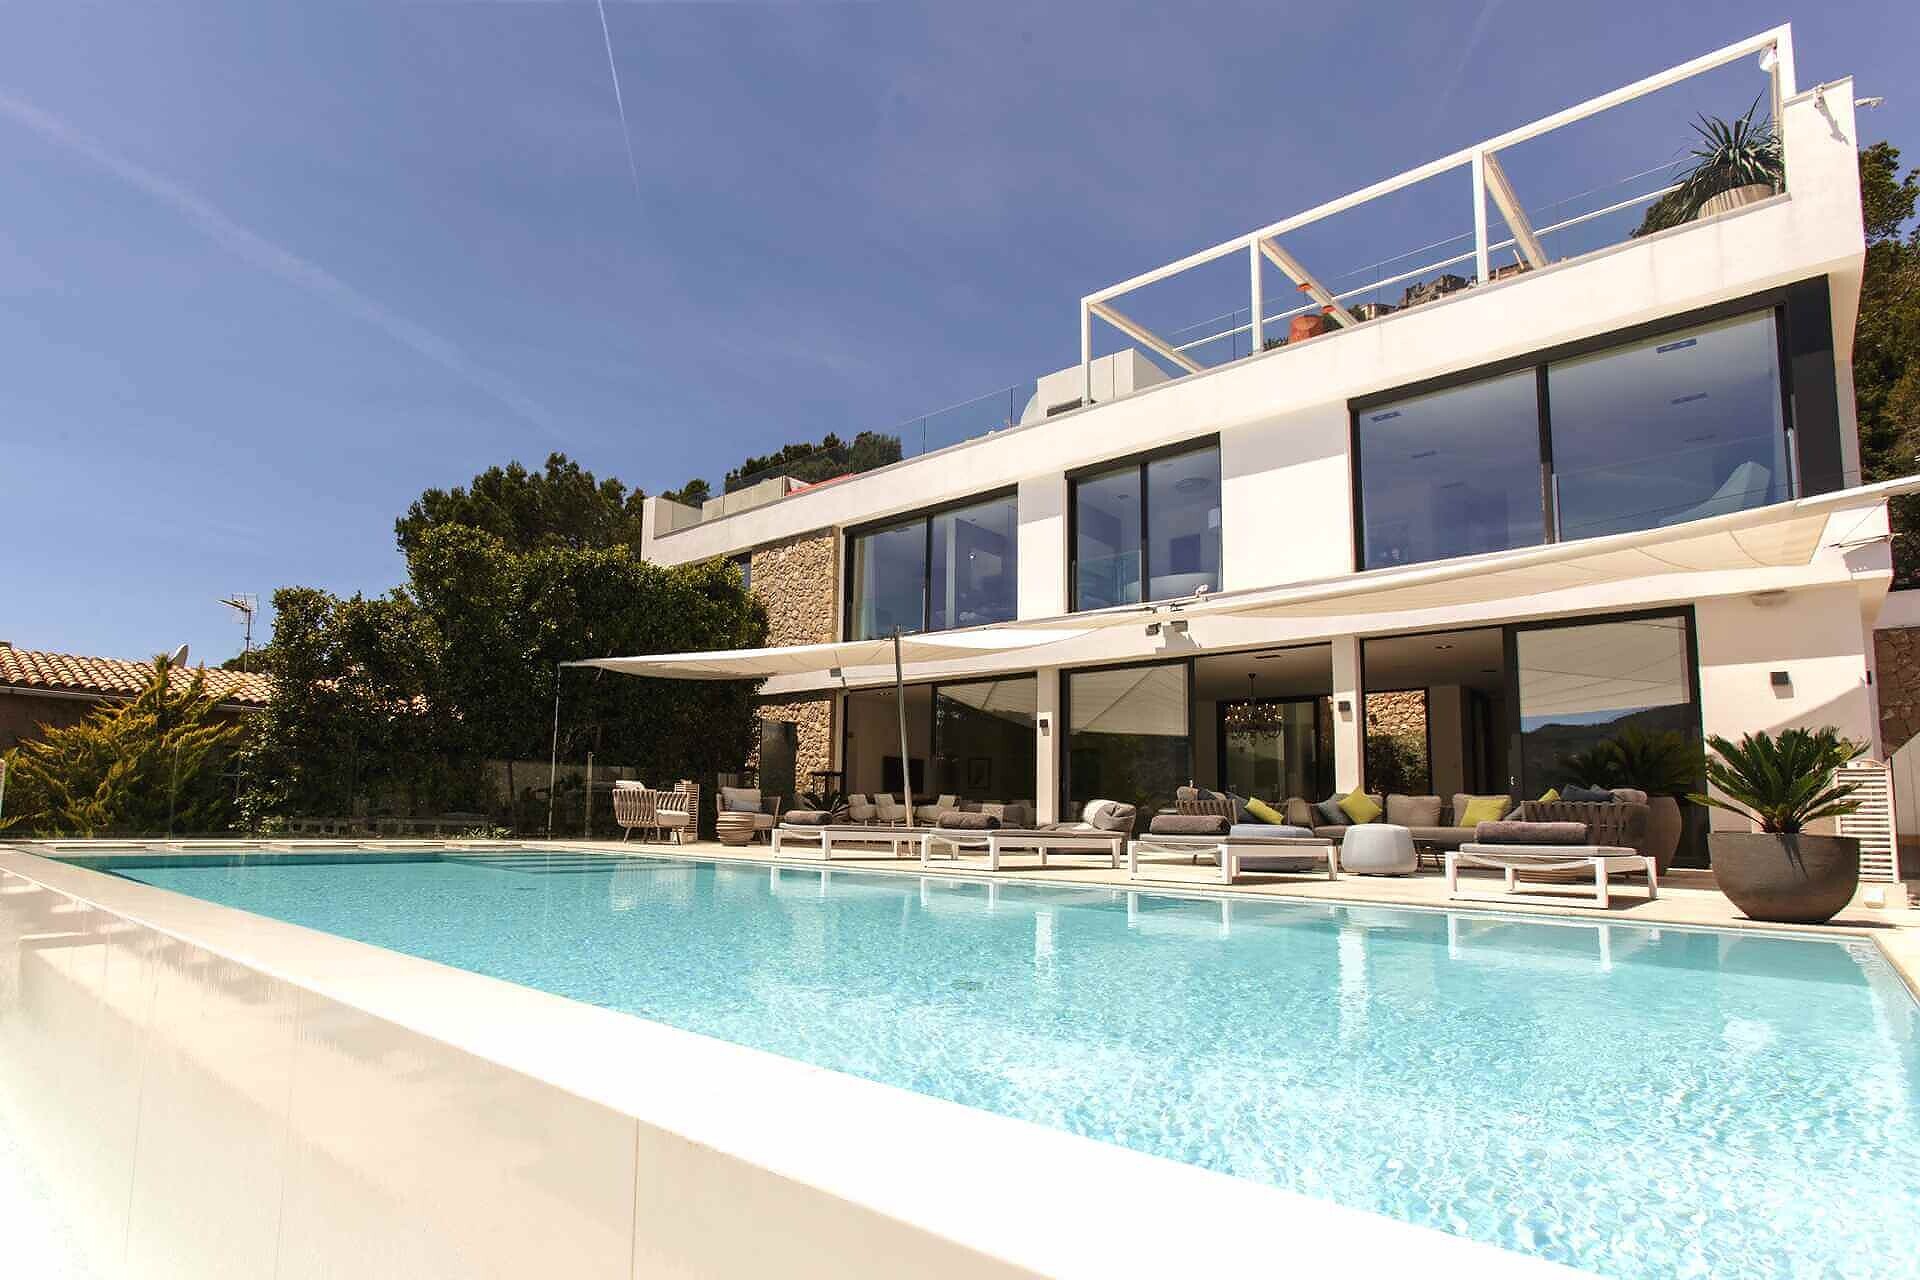 01-353 Villa with indoor pool Mallorca Southwest Bild 1